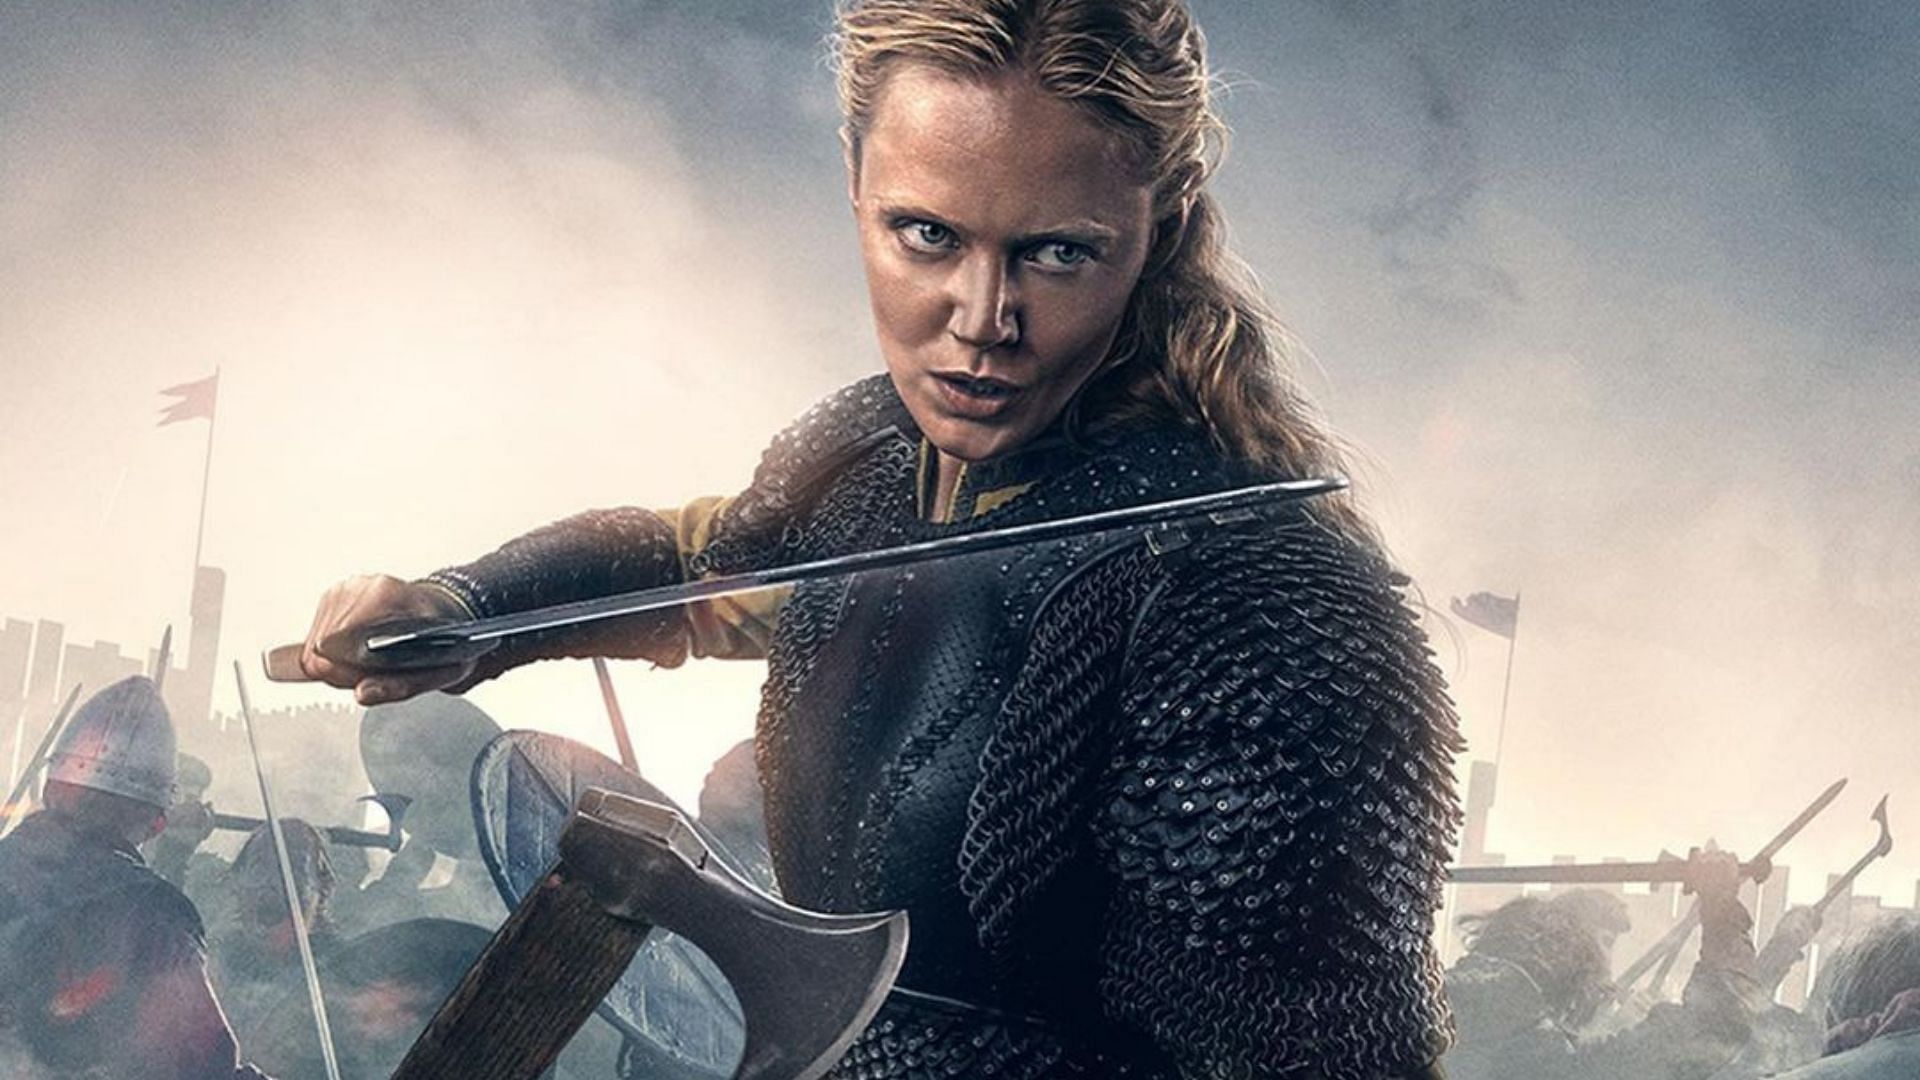 Vikings: Valhalla is currently streaming on Netflix (Image via netflixvalhalla/Instagram)